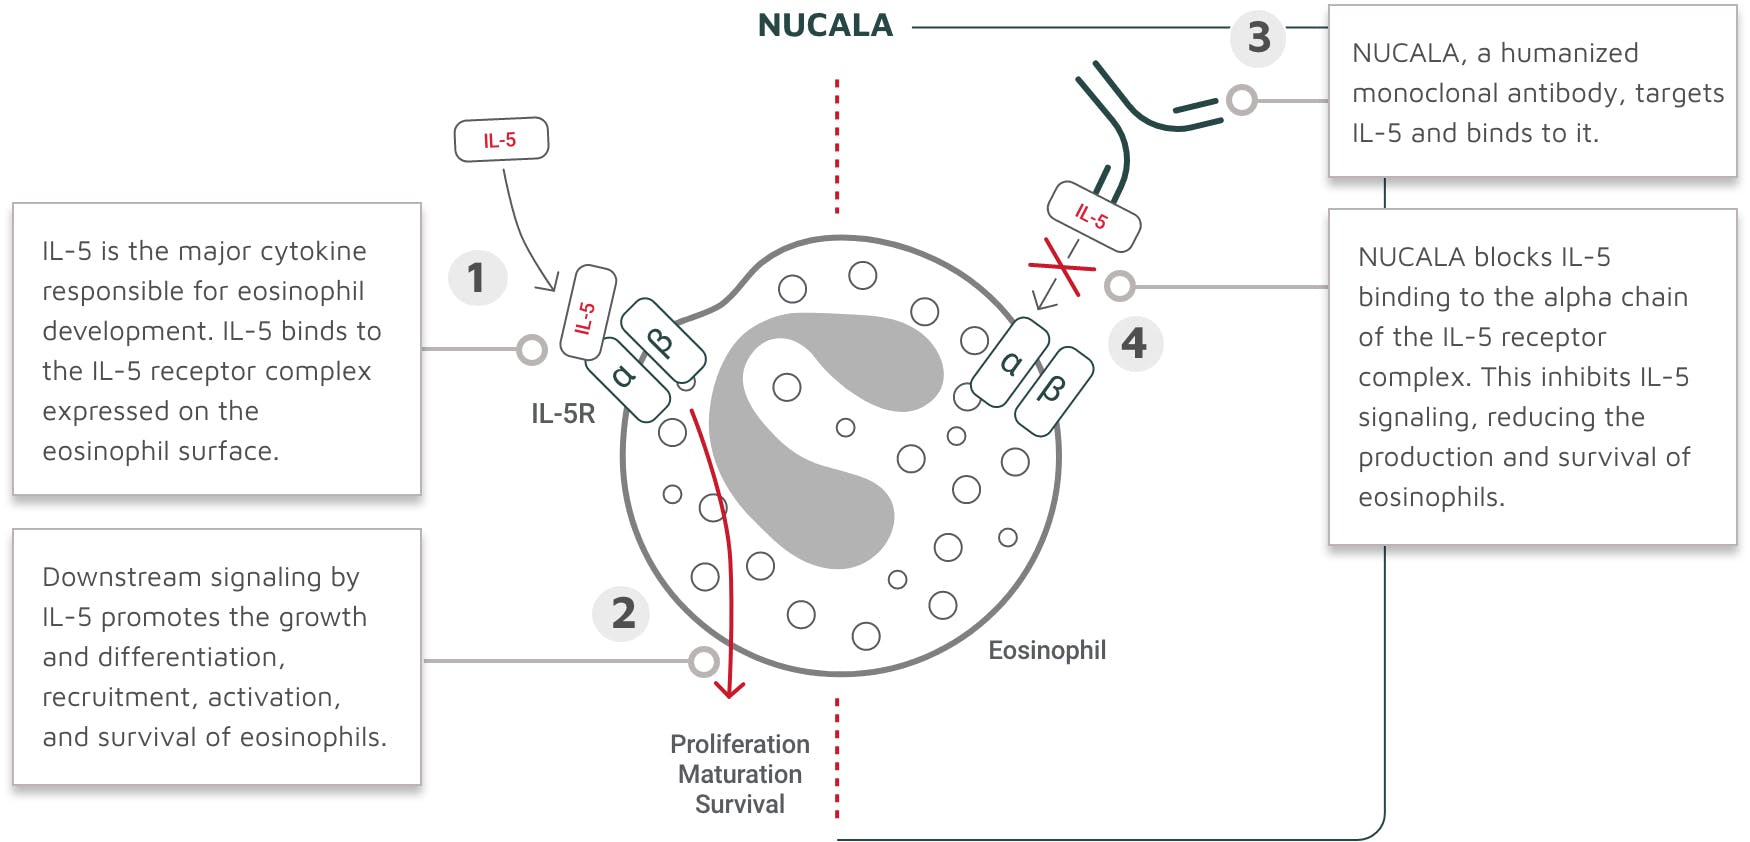 NUCALA mechanism of action diagram